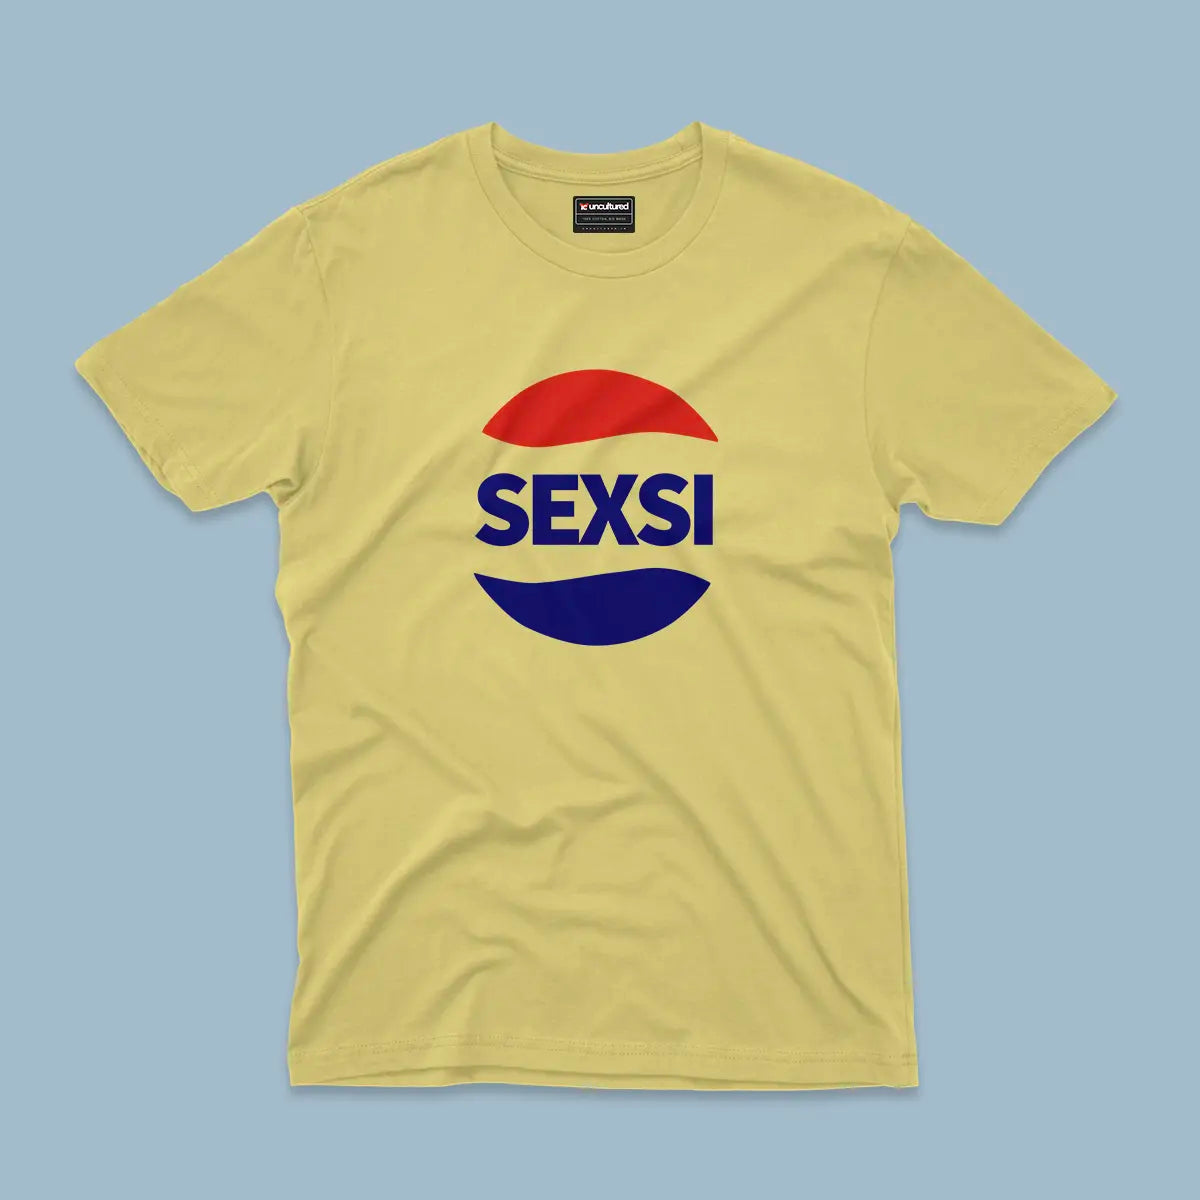 Sexsi - Unisex